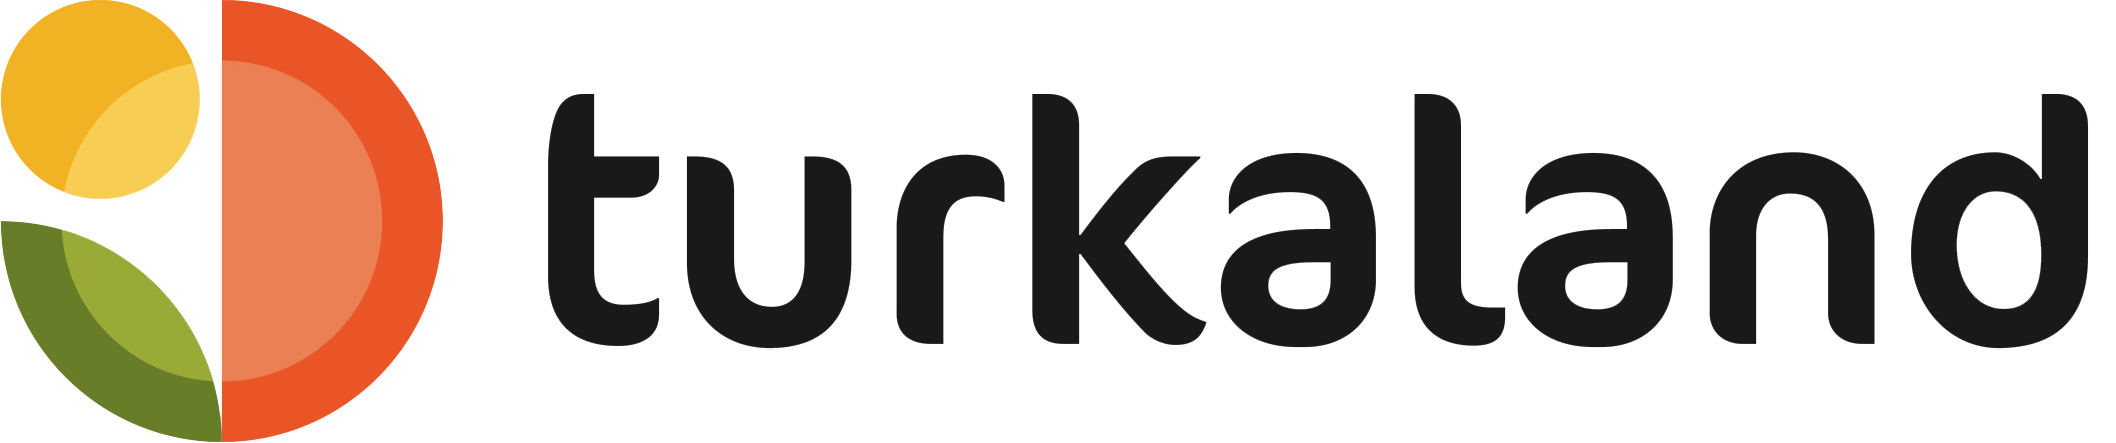 Turkaland Logo